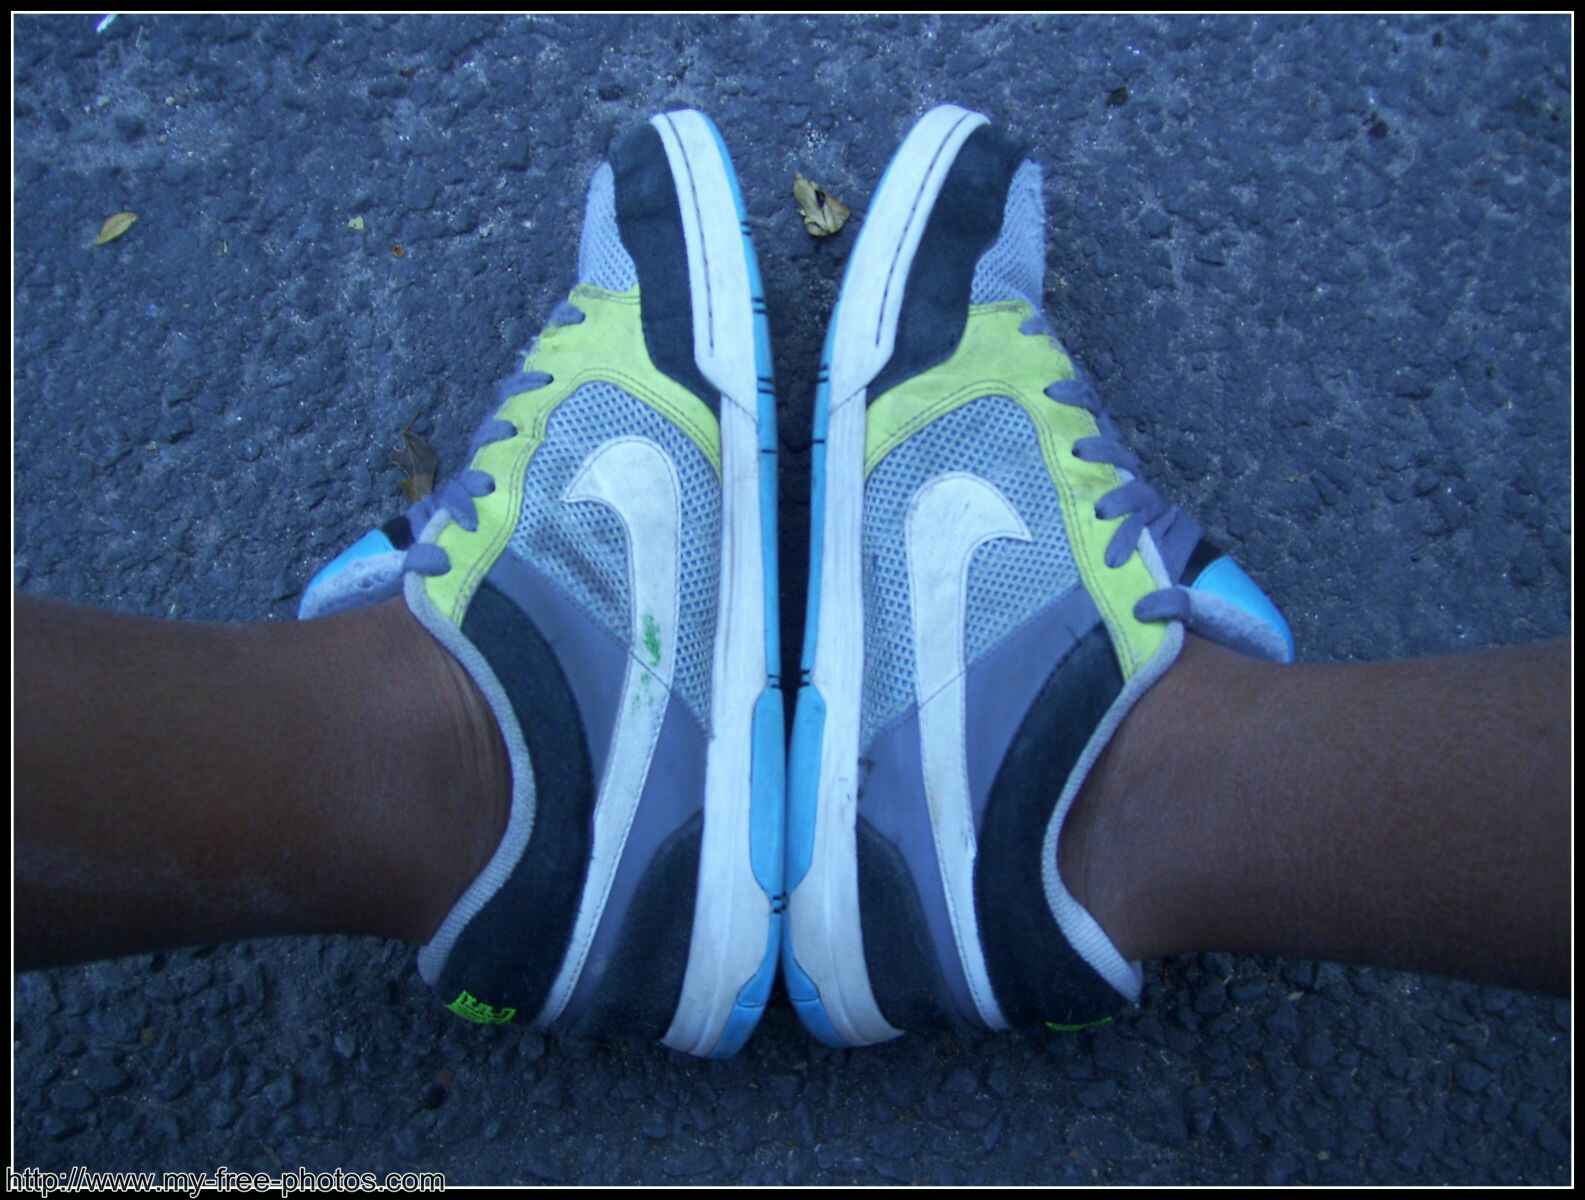 My Nike 